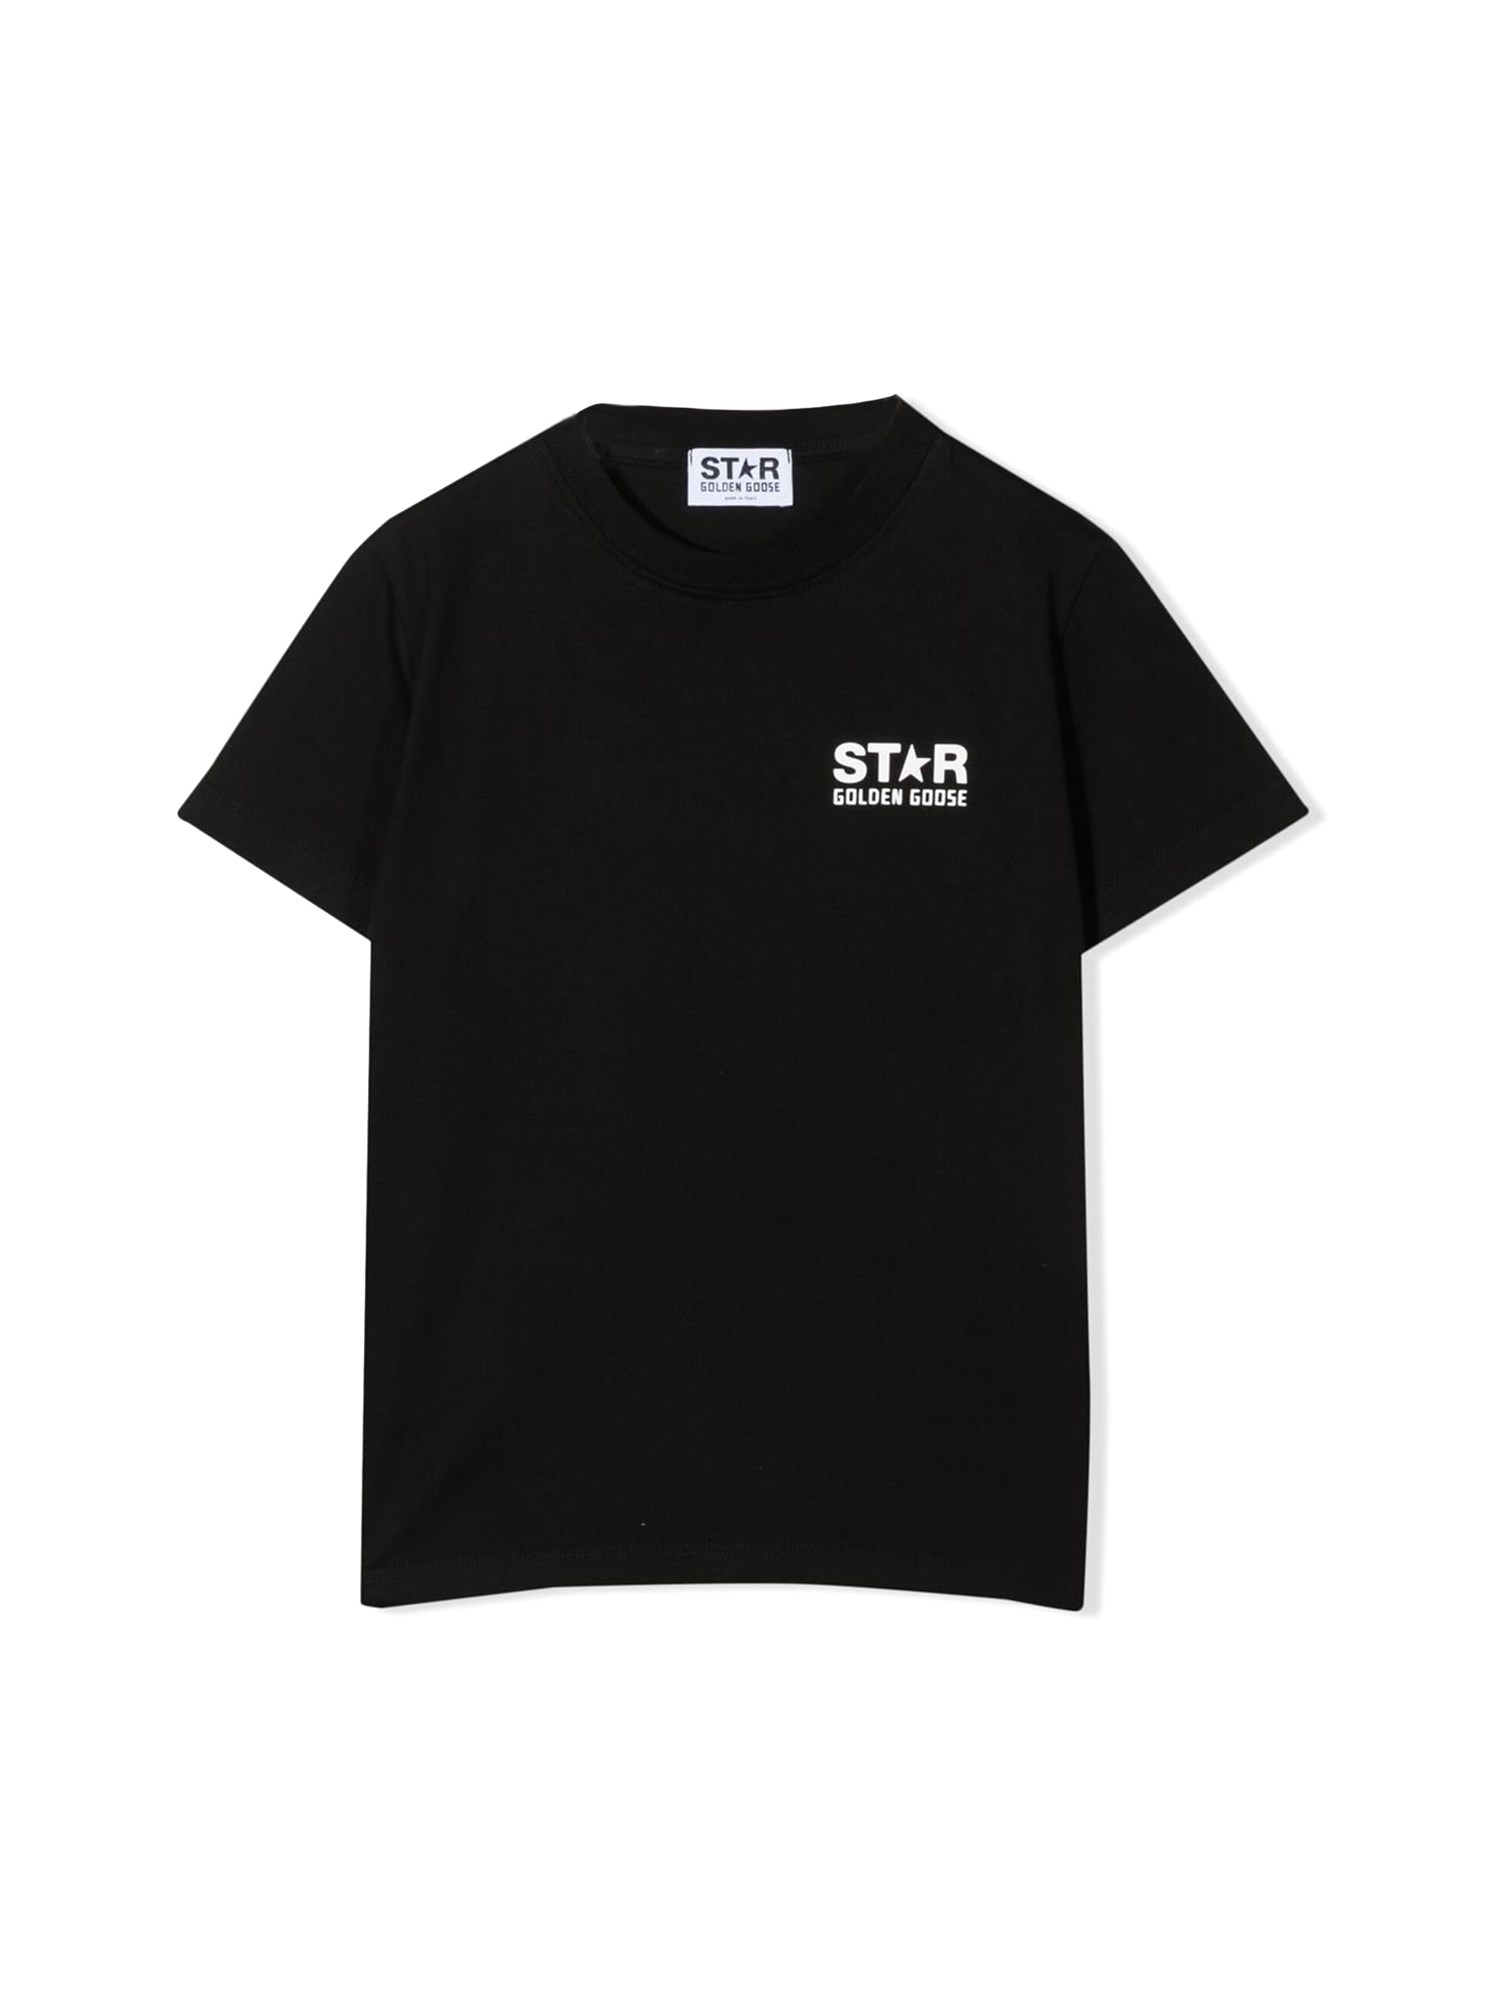 golden goose star/ boy's t-shirt s/s logo/ big star printed